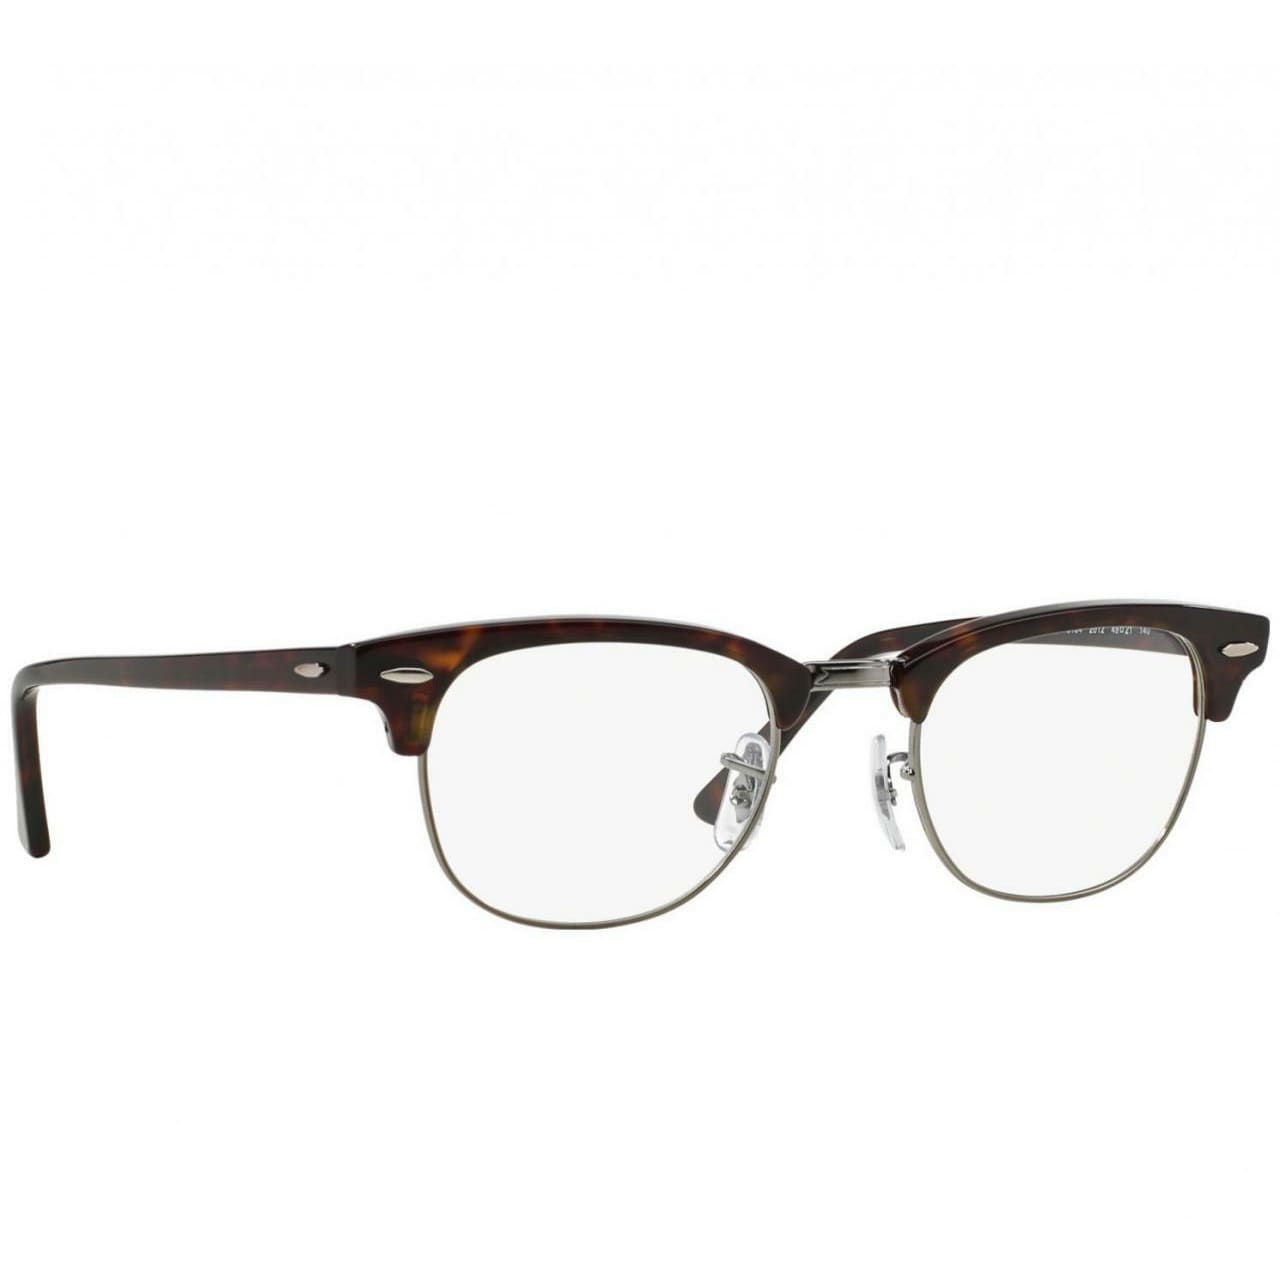 Ray-Ban RB5154 2012 Clubmaster Optics Tortoise Full Rim Square Eyeglasses Frames 8053672195781